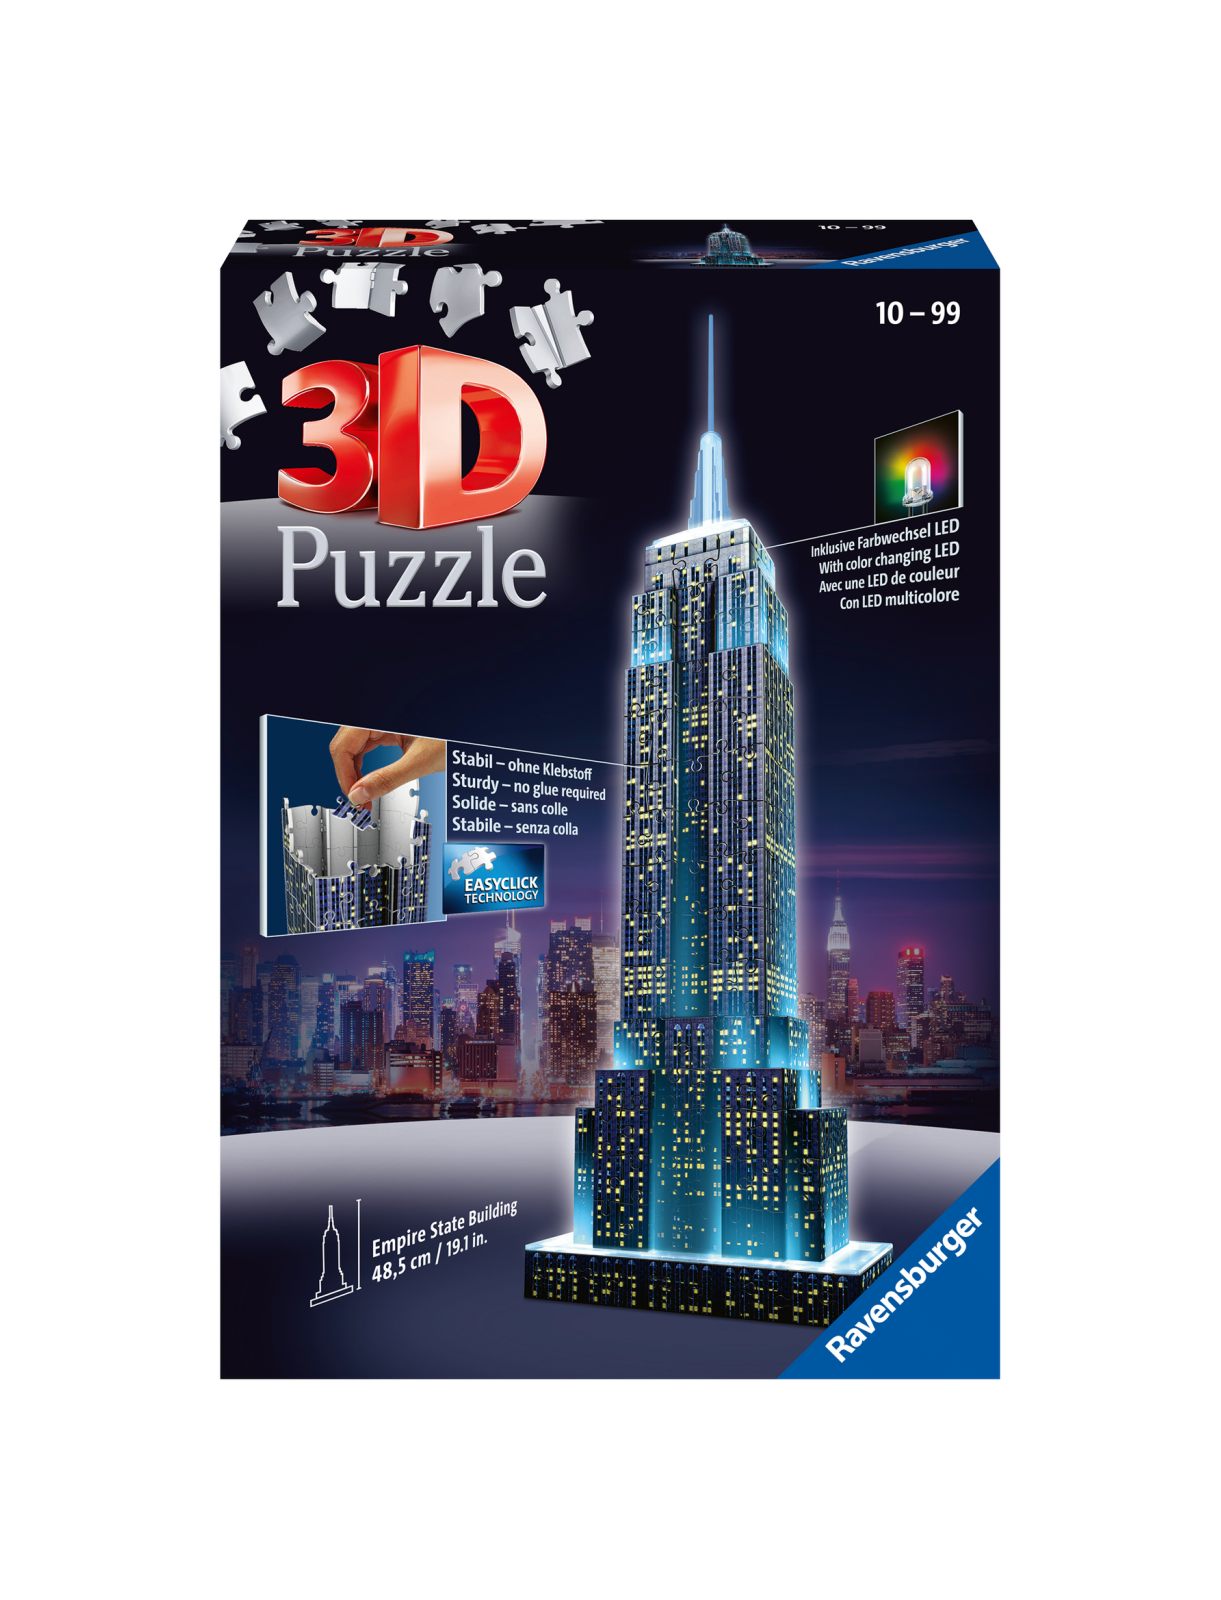 Ravensburger - 3d puzzle empire state building night edition, new york, 216 pezzi, 10+ anni - RAVENSBURGER 3D PUZZLE